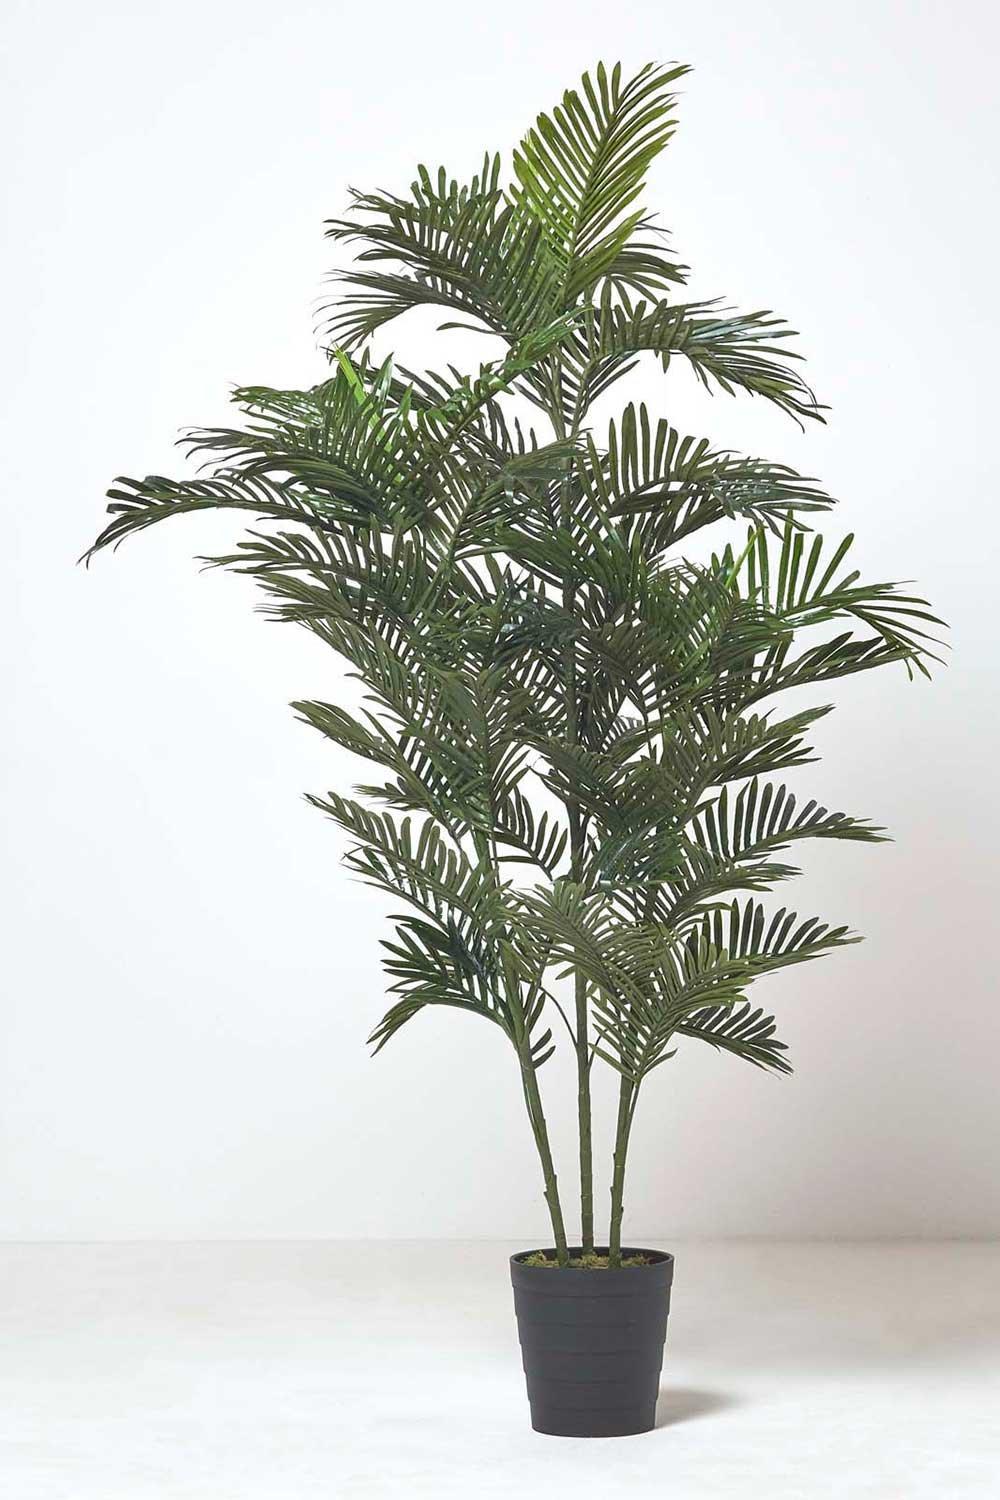 Areca Palm Tree in Pot, 120 cm Tall